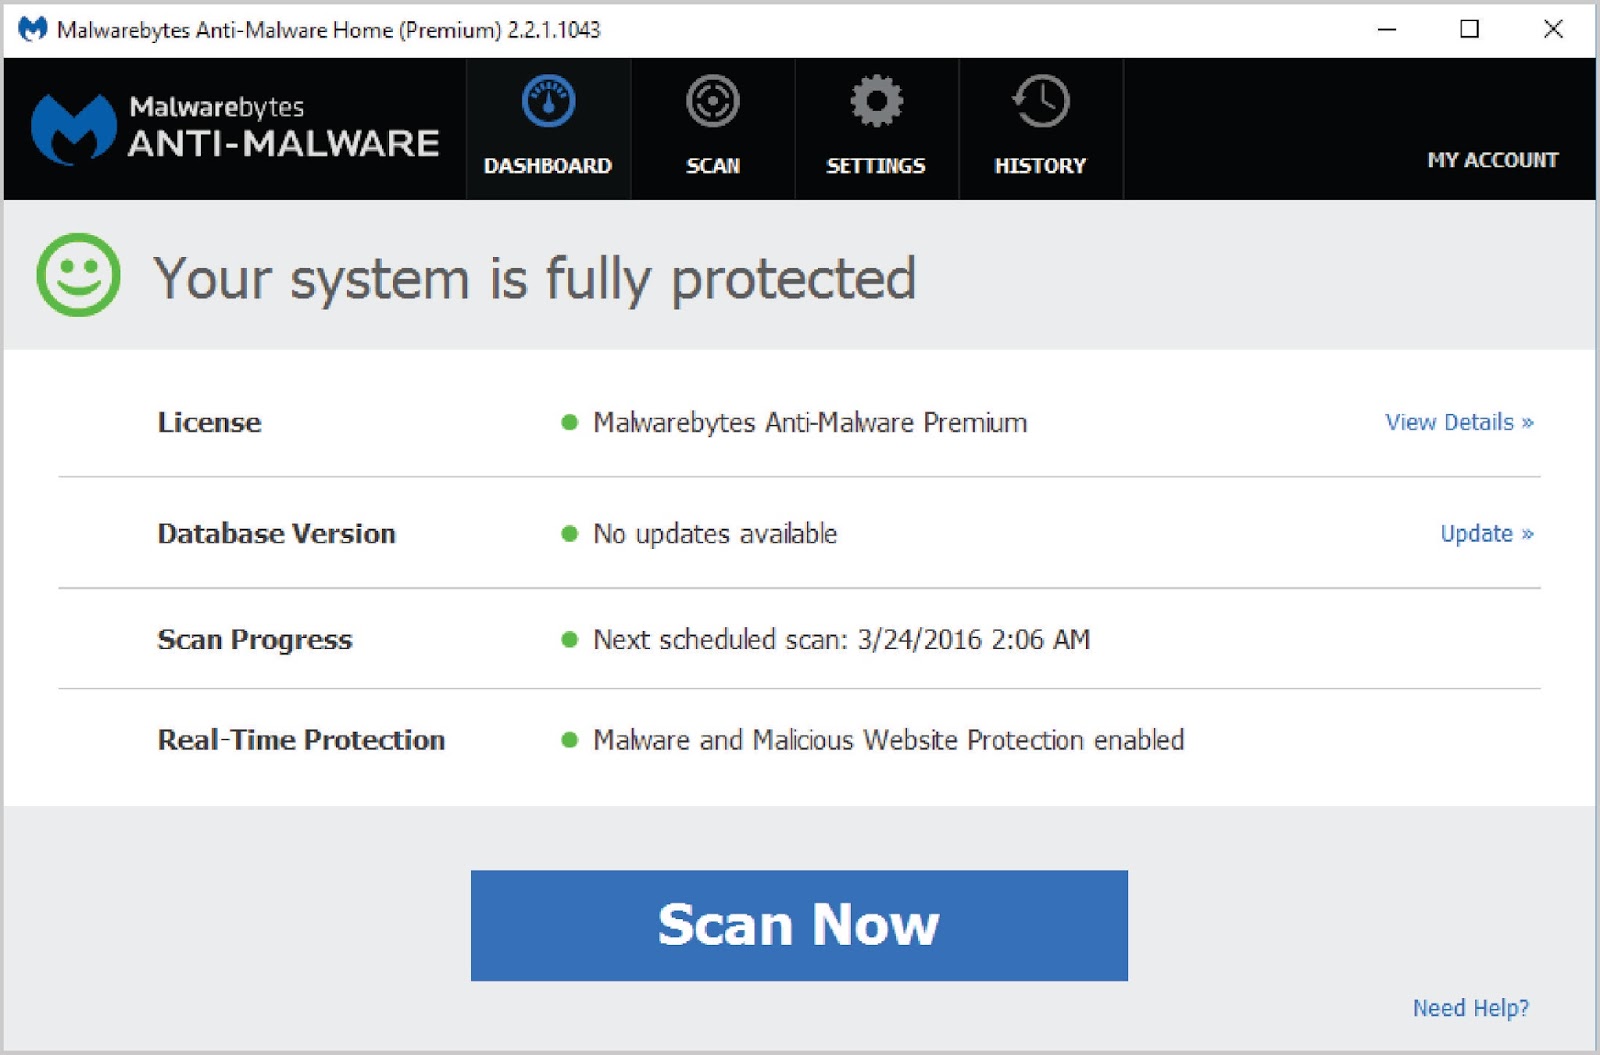 malwarebytes anti-malware premium lifetime license download free